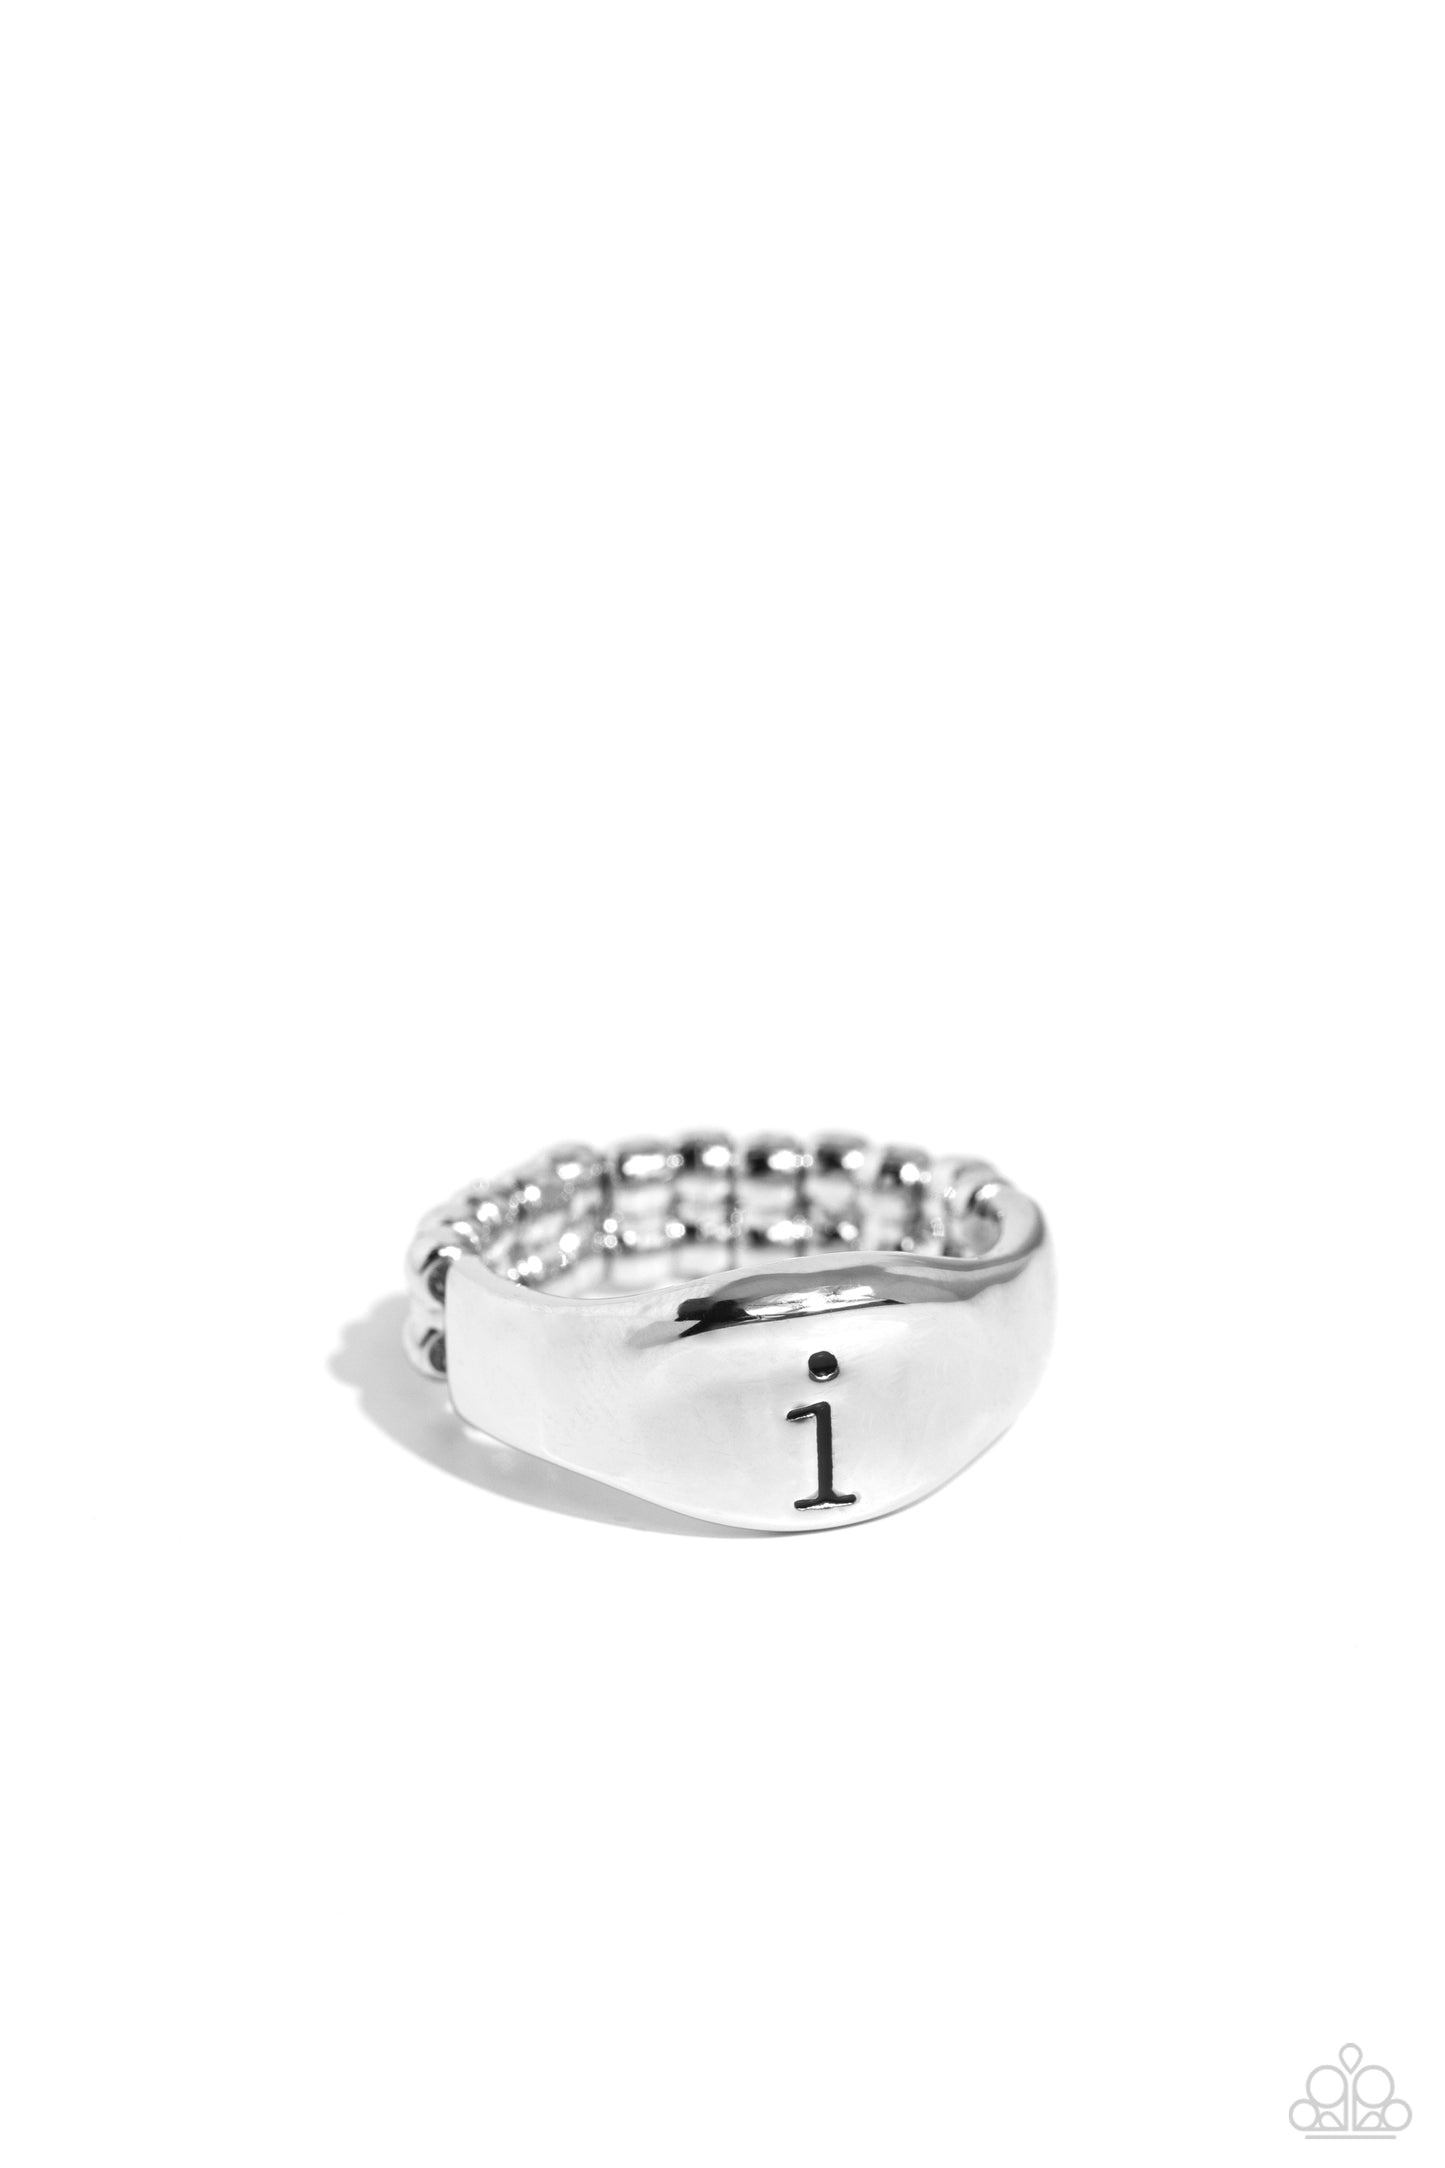 Monogram Memento - silver - I - Paparazzi ring